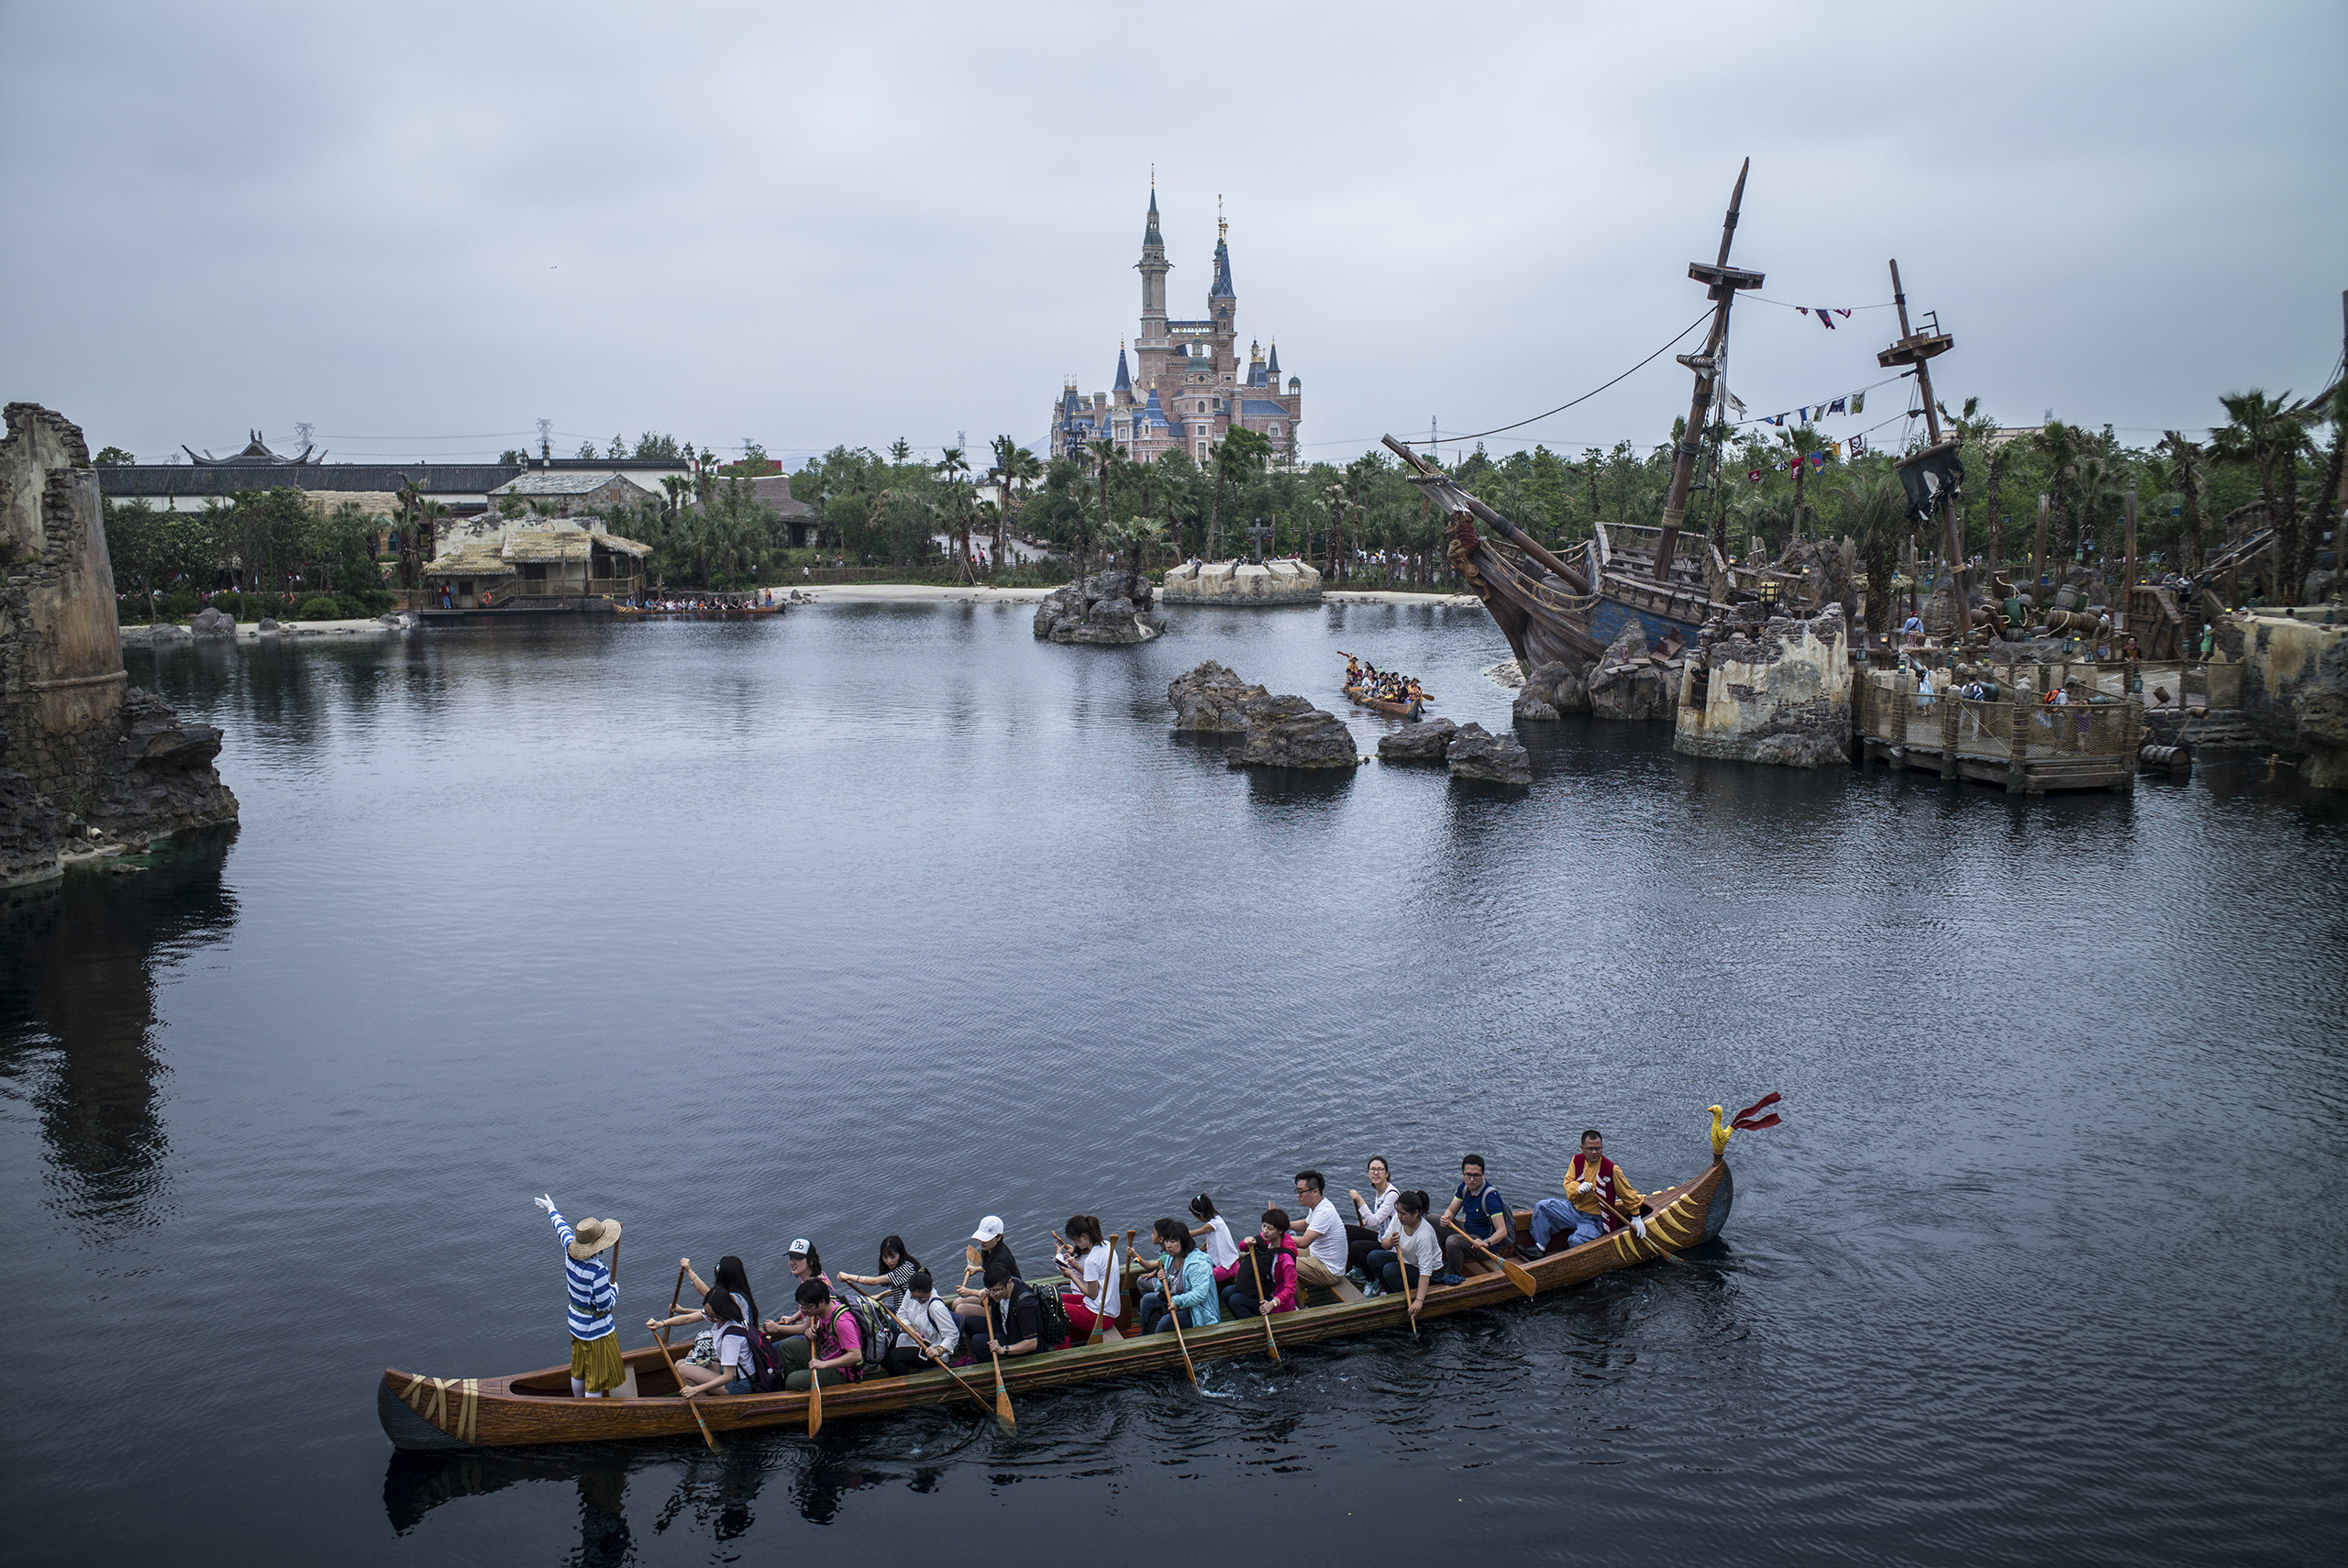 Visitors take the canoe ride at Treasure Cove at Shanghai Disneyland in China.